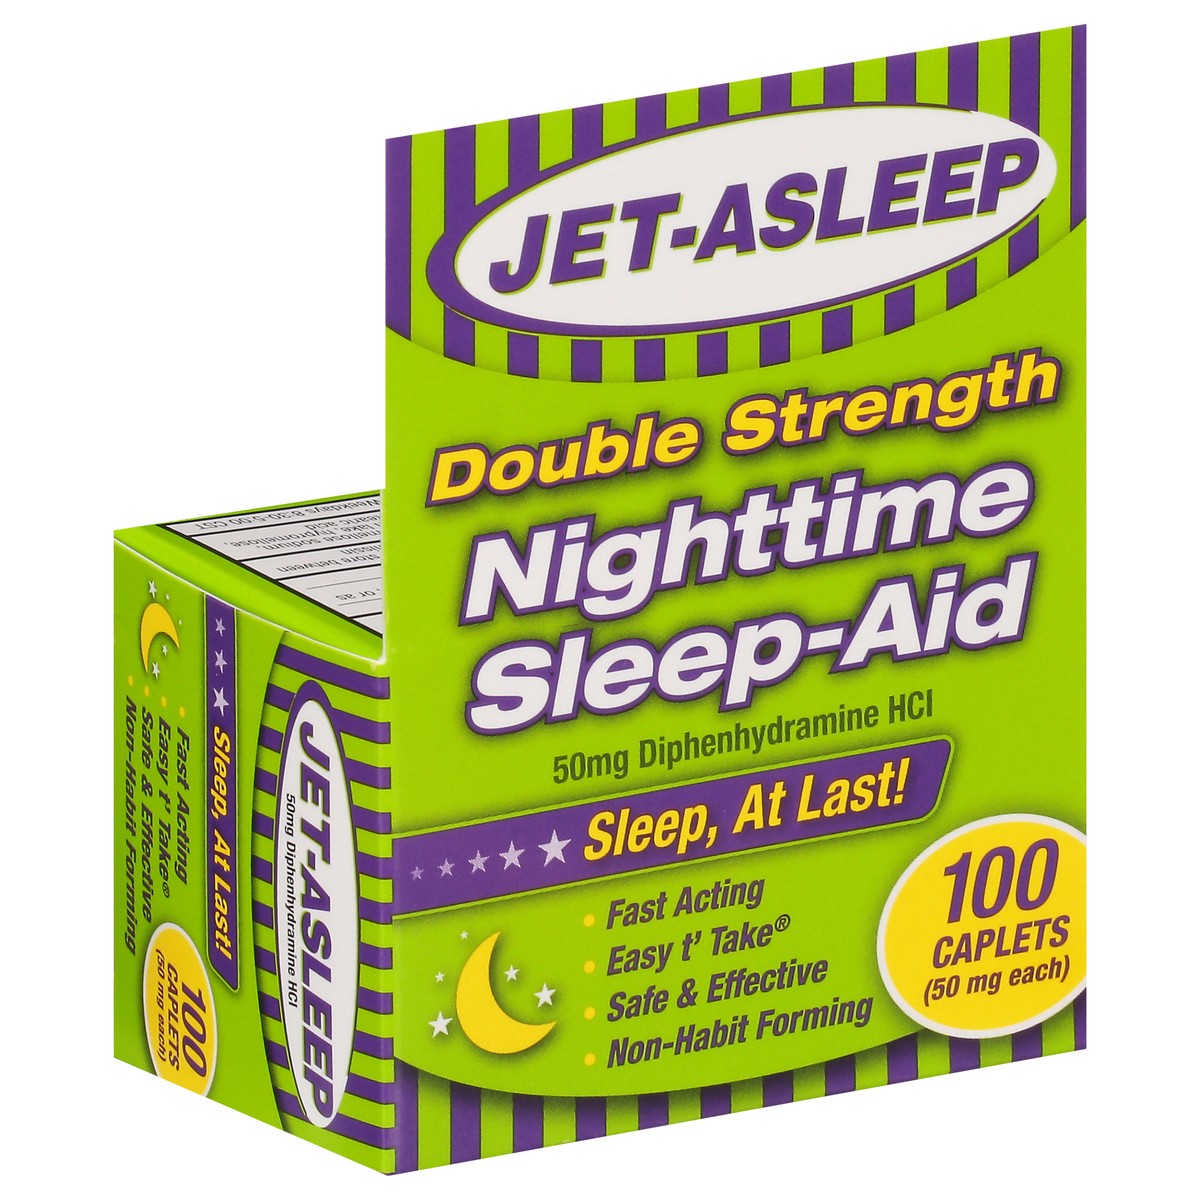 slide 2 of 9, Jet-Asleep Double Strength 50 mg Nighttime Sleep-Aid 100 Caplets, 100 ct